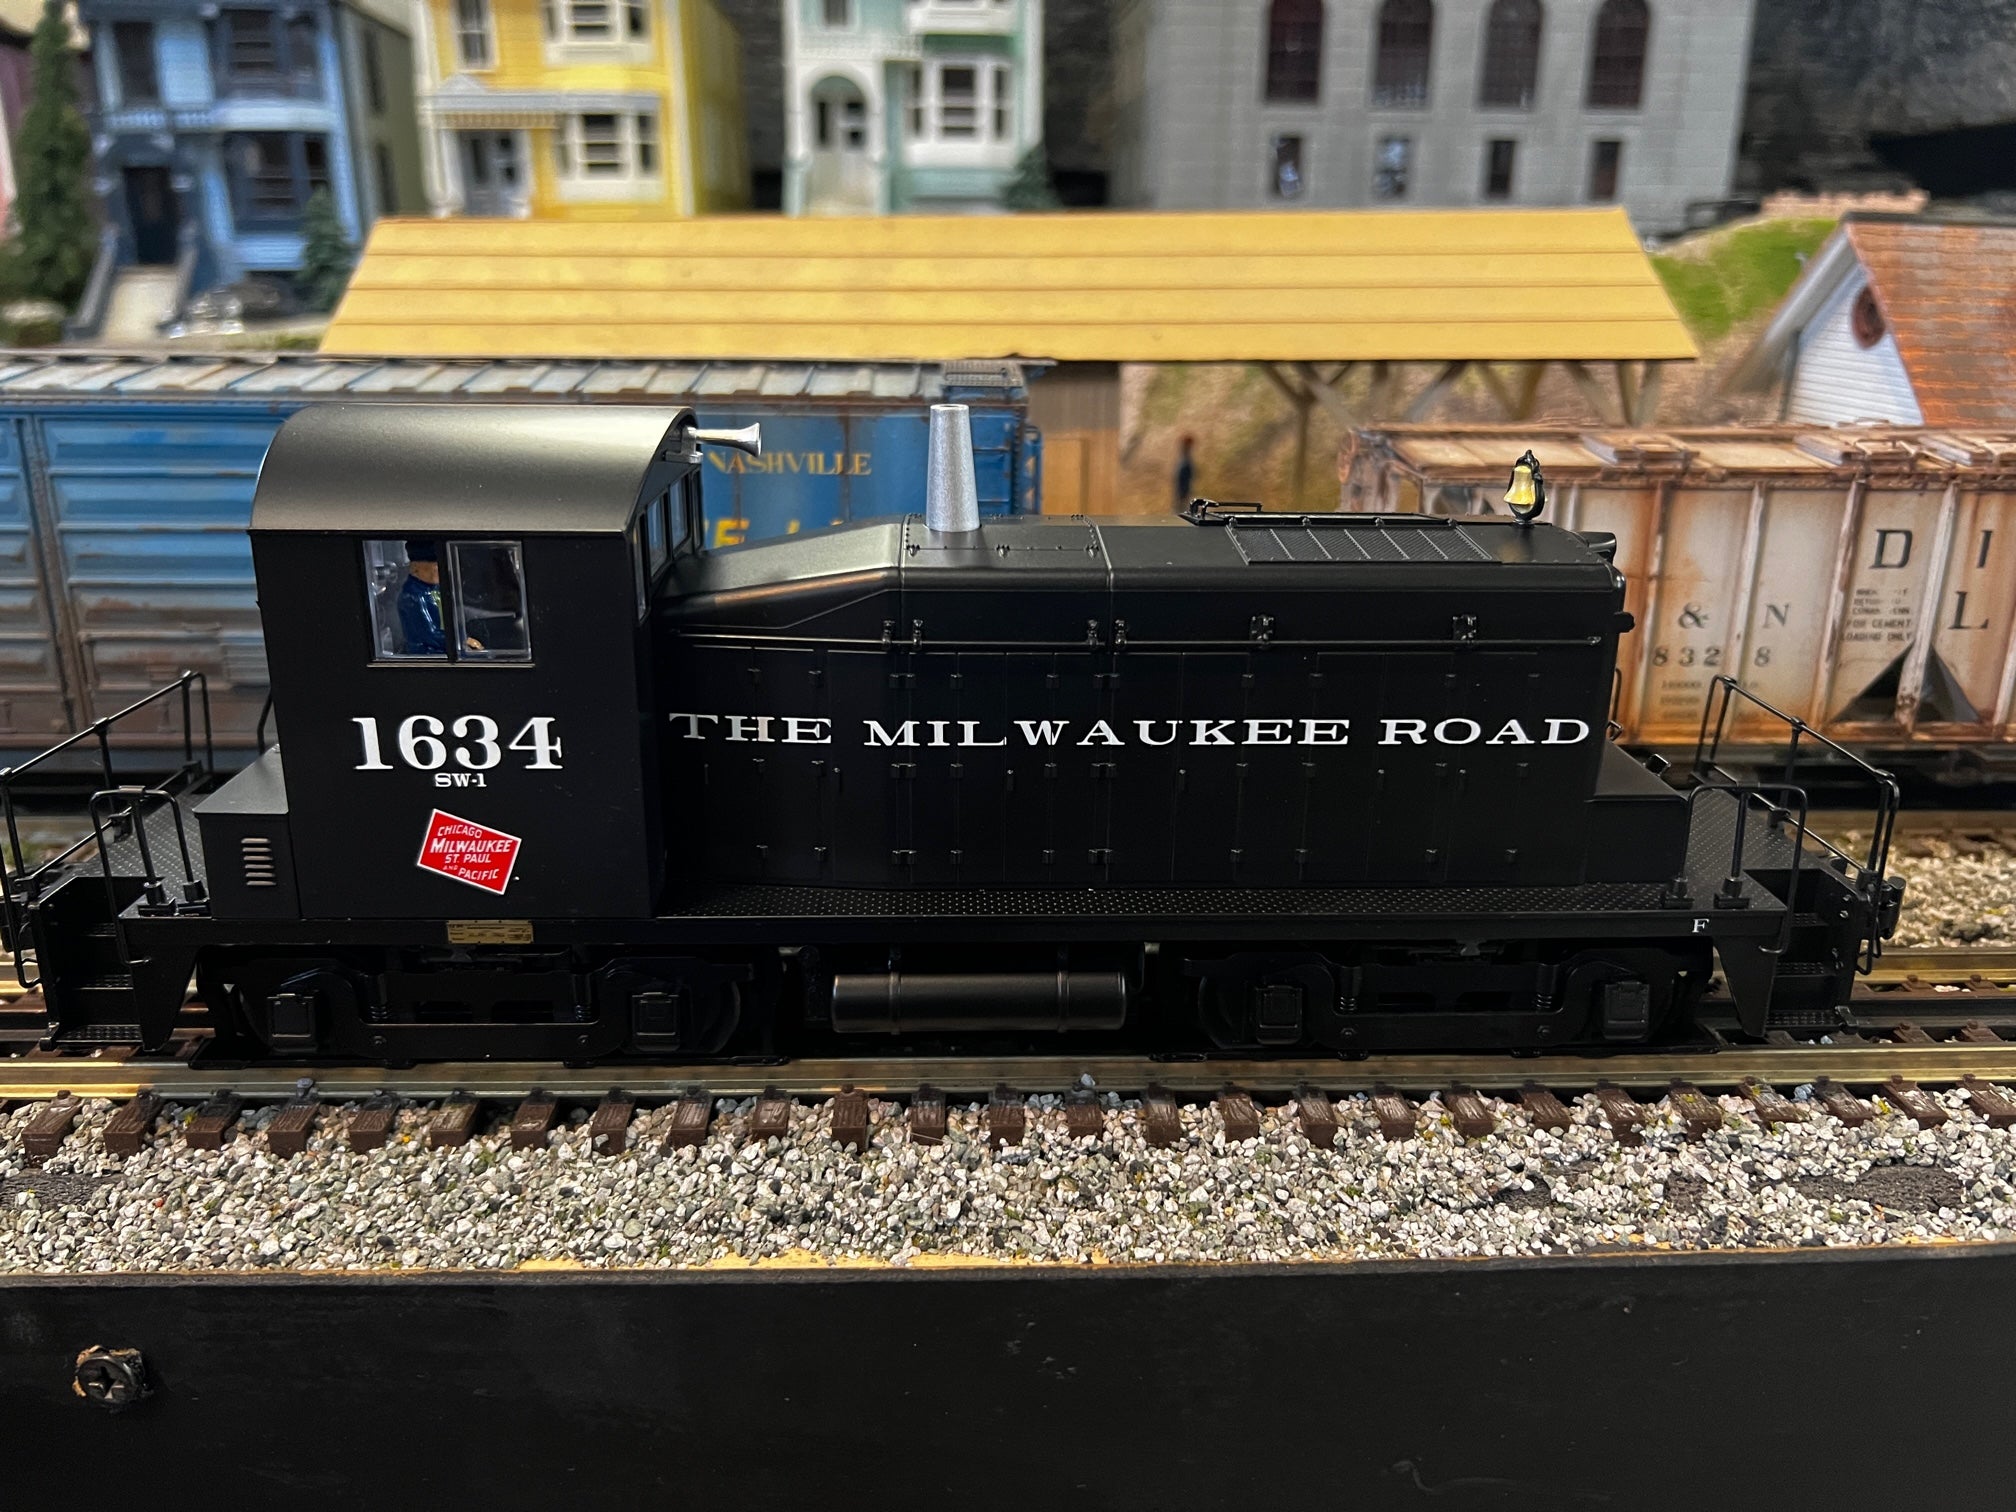 Lionel 2233971 - Legacy SW1 Diesel Locomotive "Milwaukee Road" #1634 - Custom Run for MrMuffin'sTrains